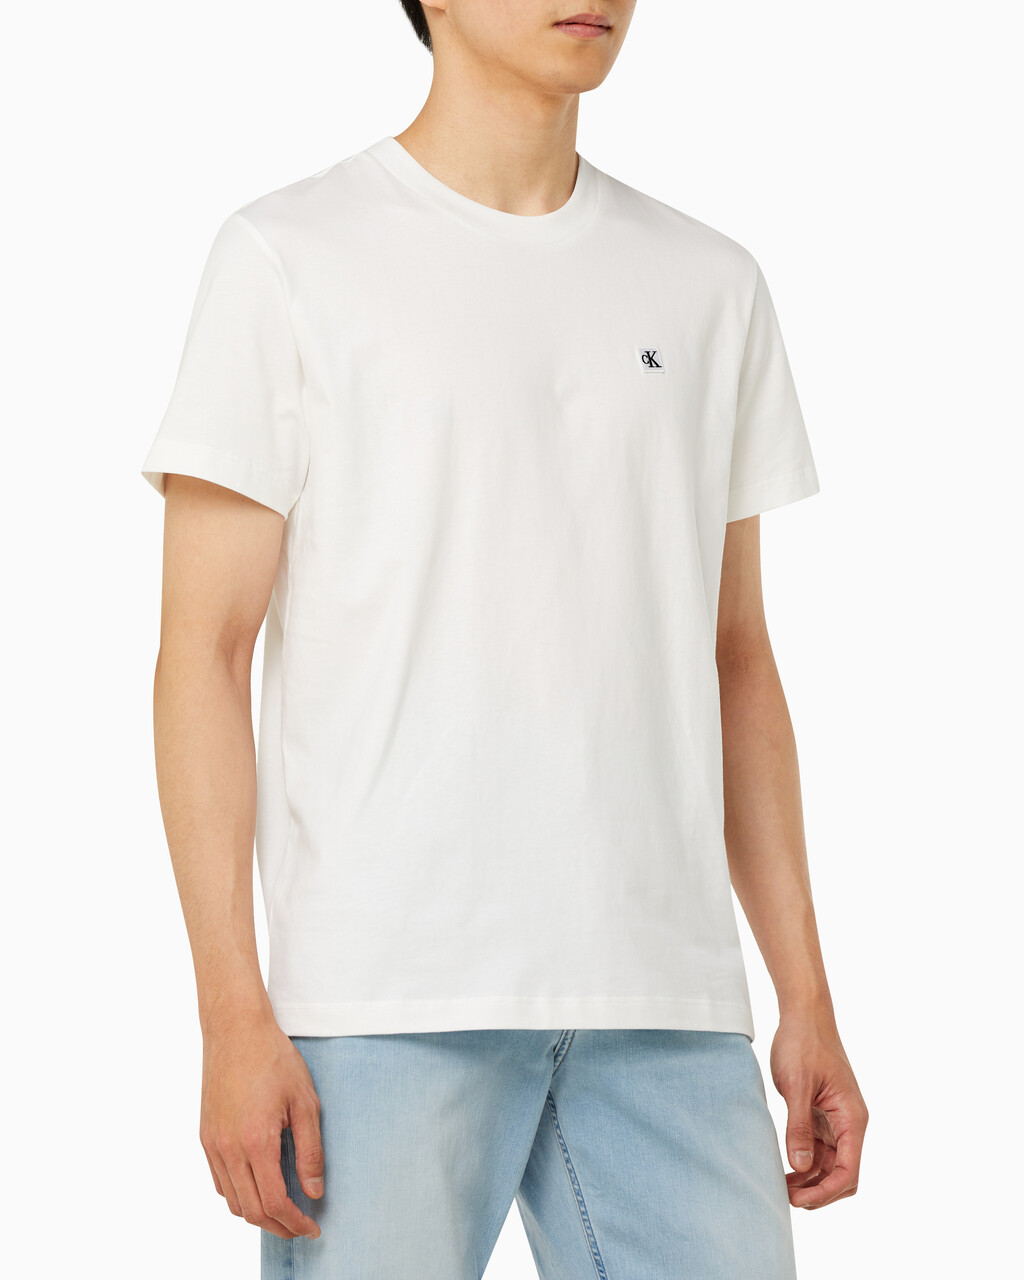 Buy 남성 레귤러핏 CK 로고 뱃지 반팔 티셔츠 in color BRIGHT WHITE